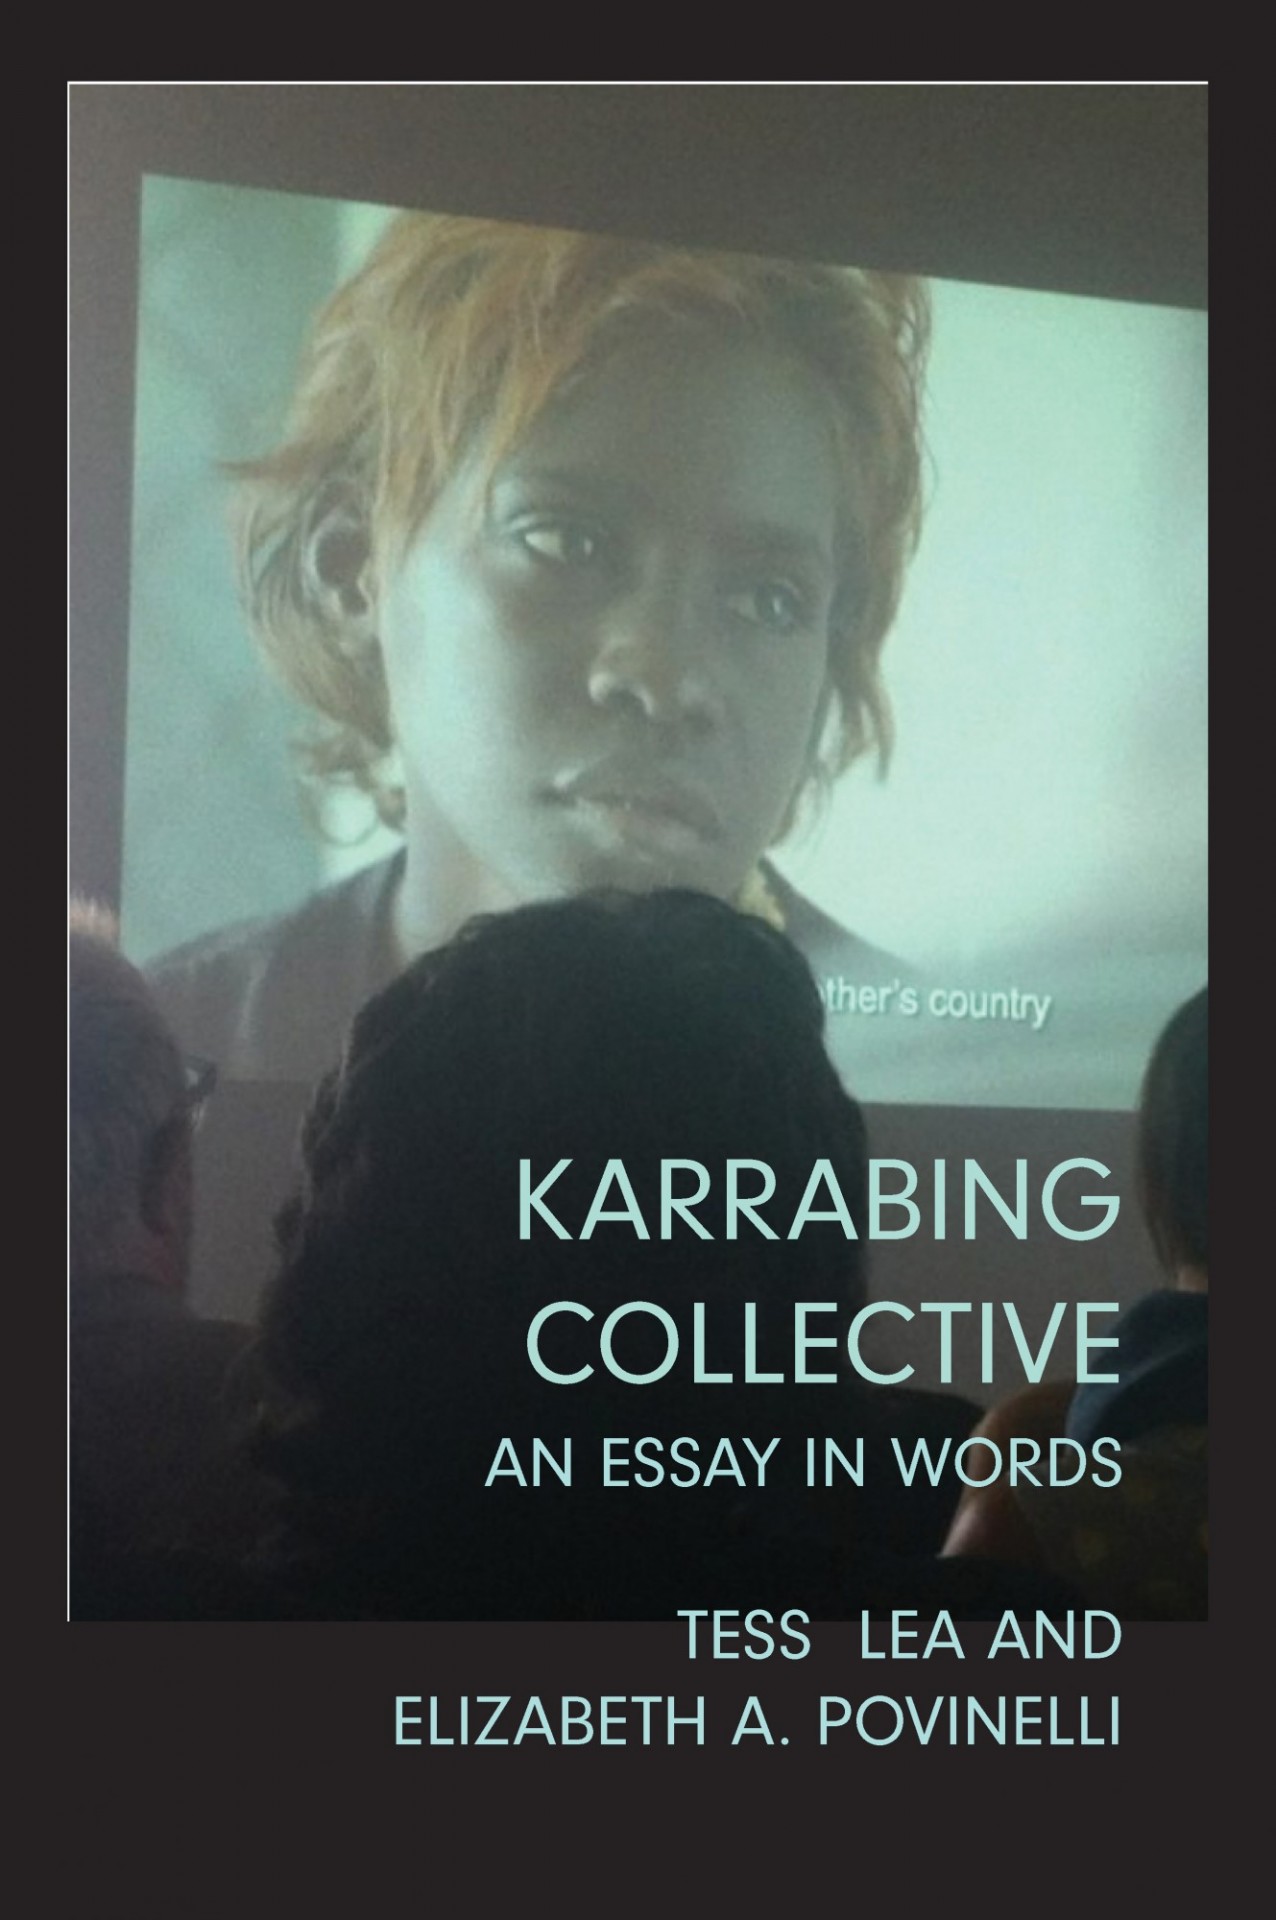 Elizabeth A. Povinelli, 'Karrabing Collective: An Essay in Words'